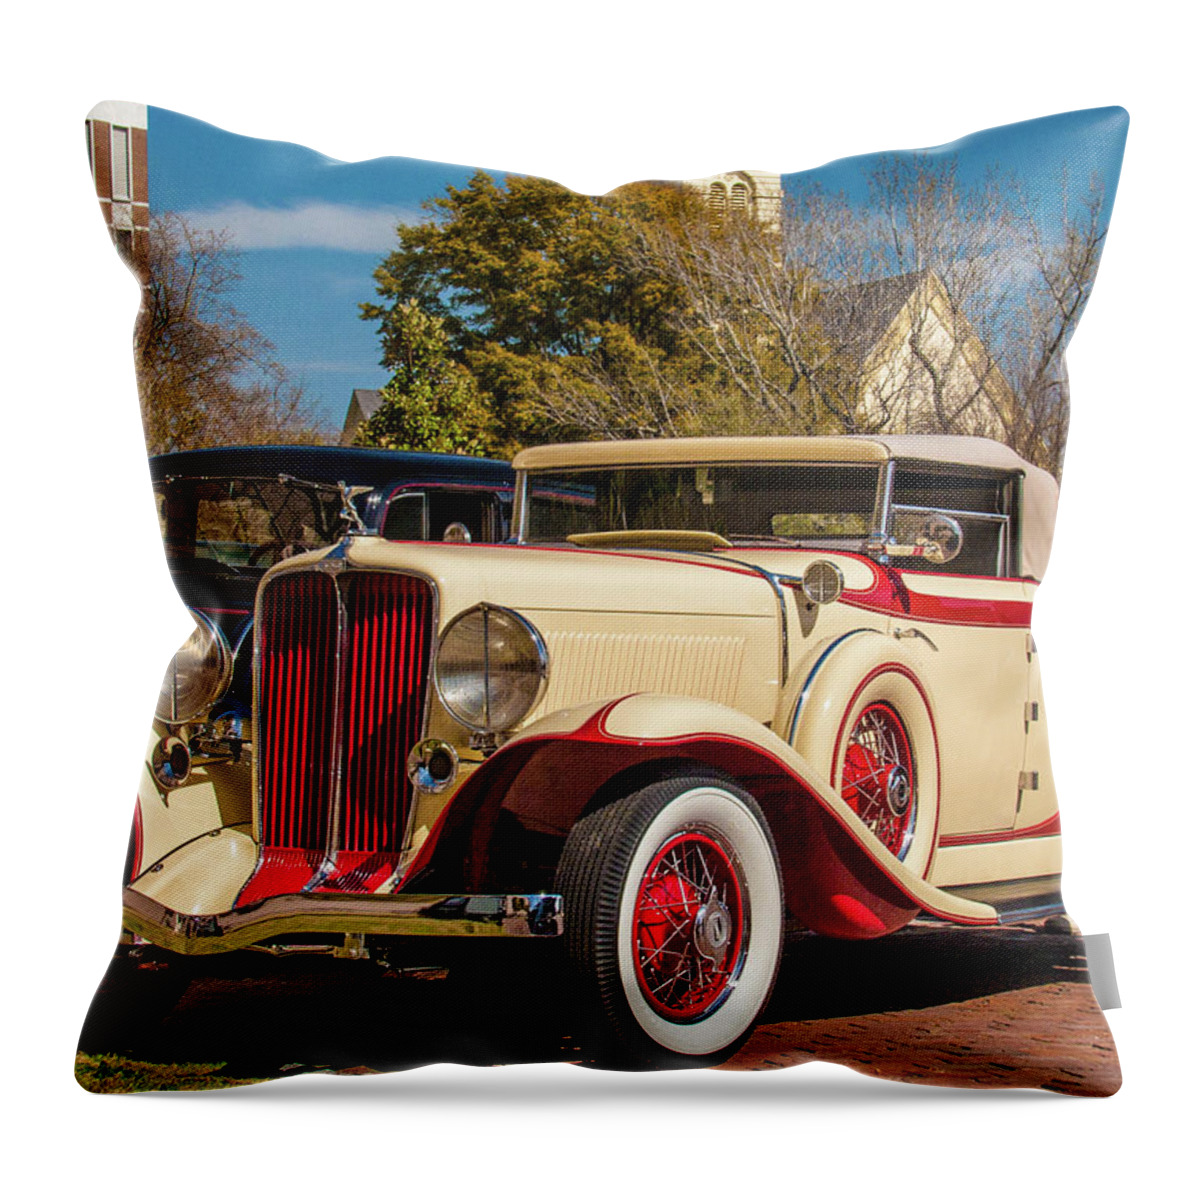 Automobile Throw Pillow featuring the photograph Duesenberg Antique Automobile by Louis Dallara